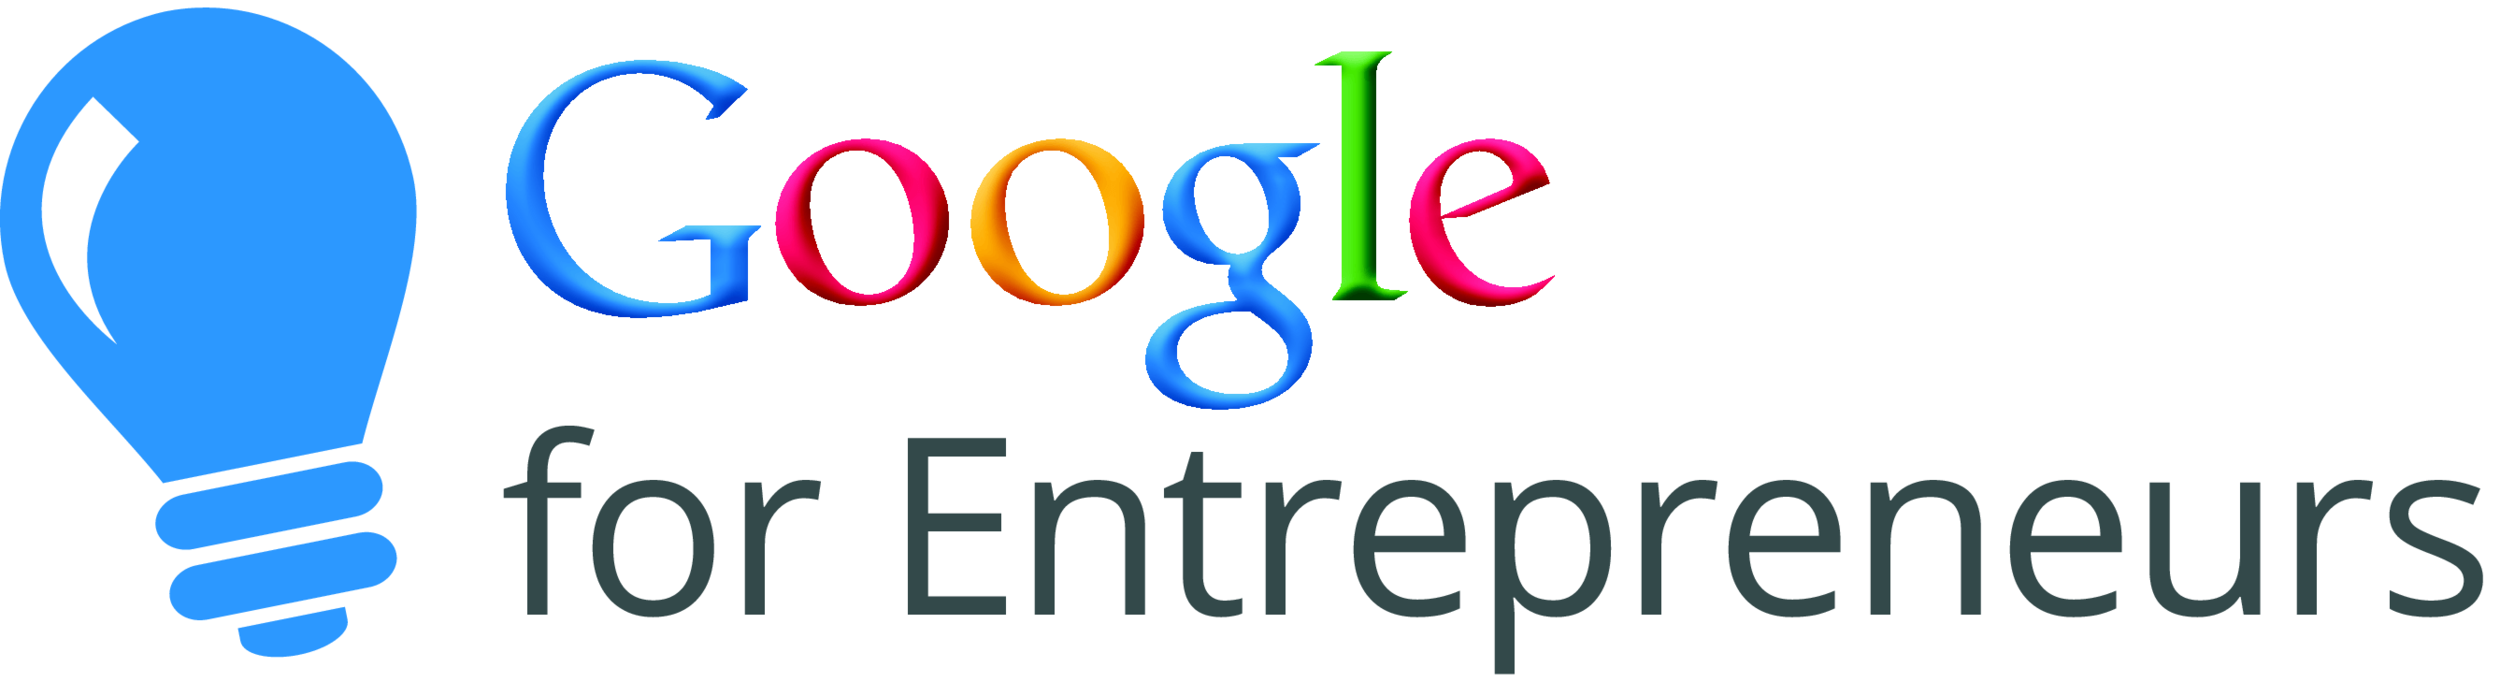 google-for-entrepreneurs-2015.png